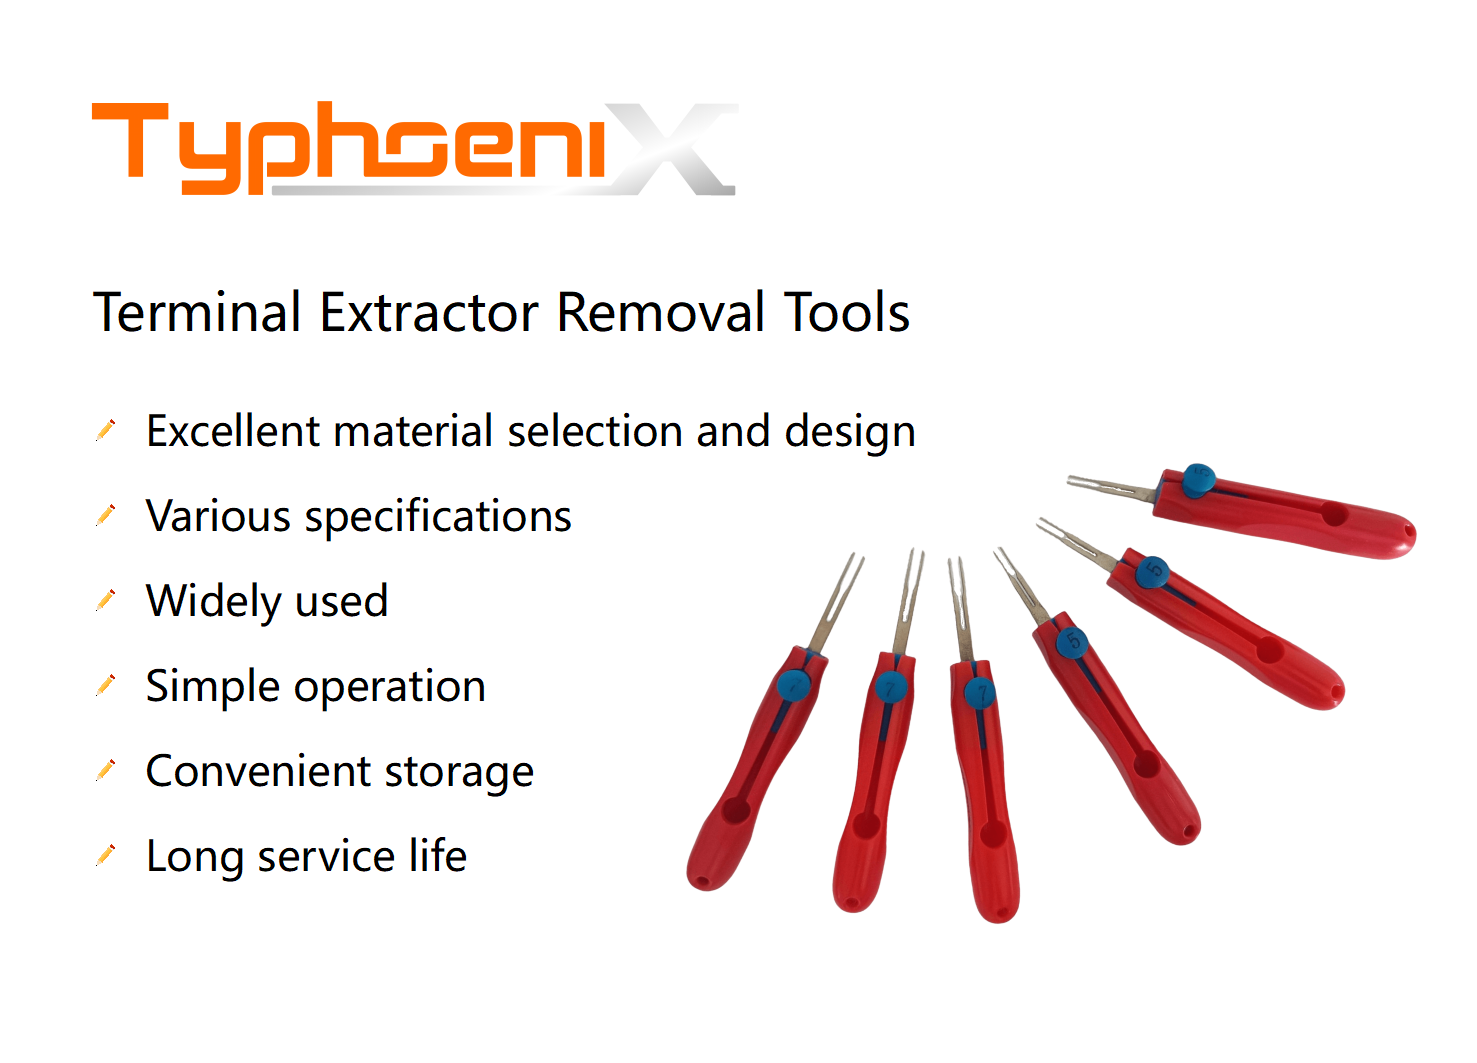 Typhoenix Terminal Extractor Removal Tools